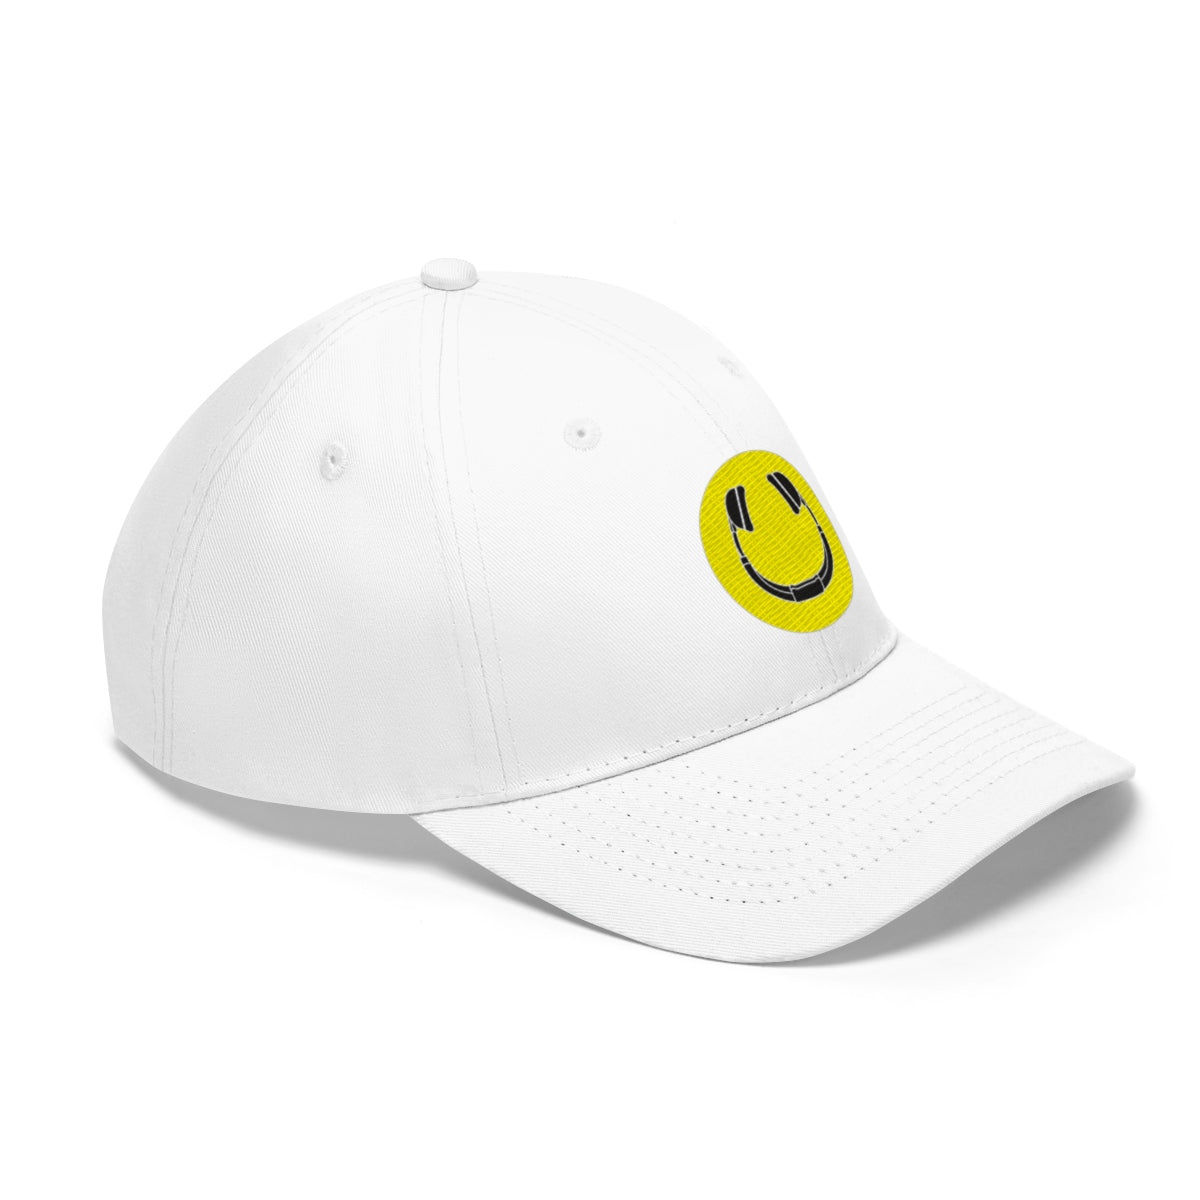 Smiling Headphones Hat